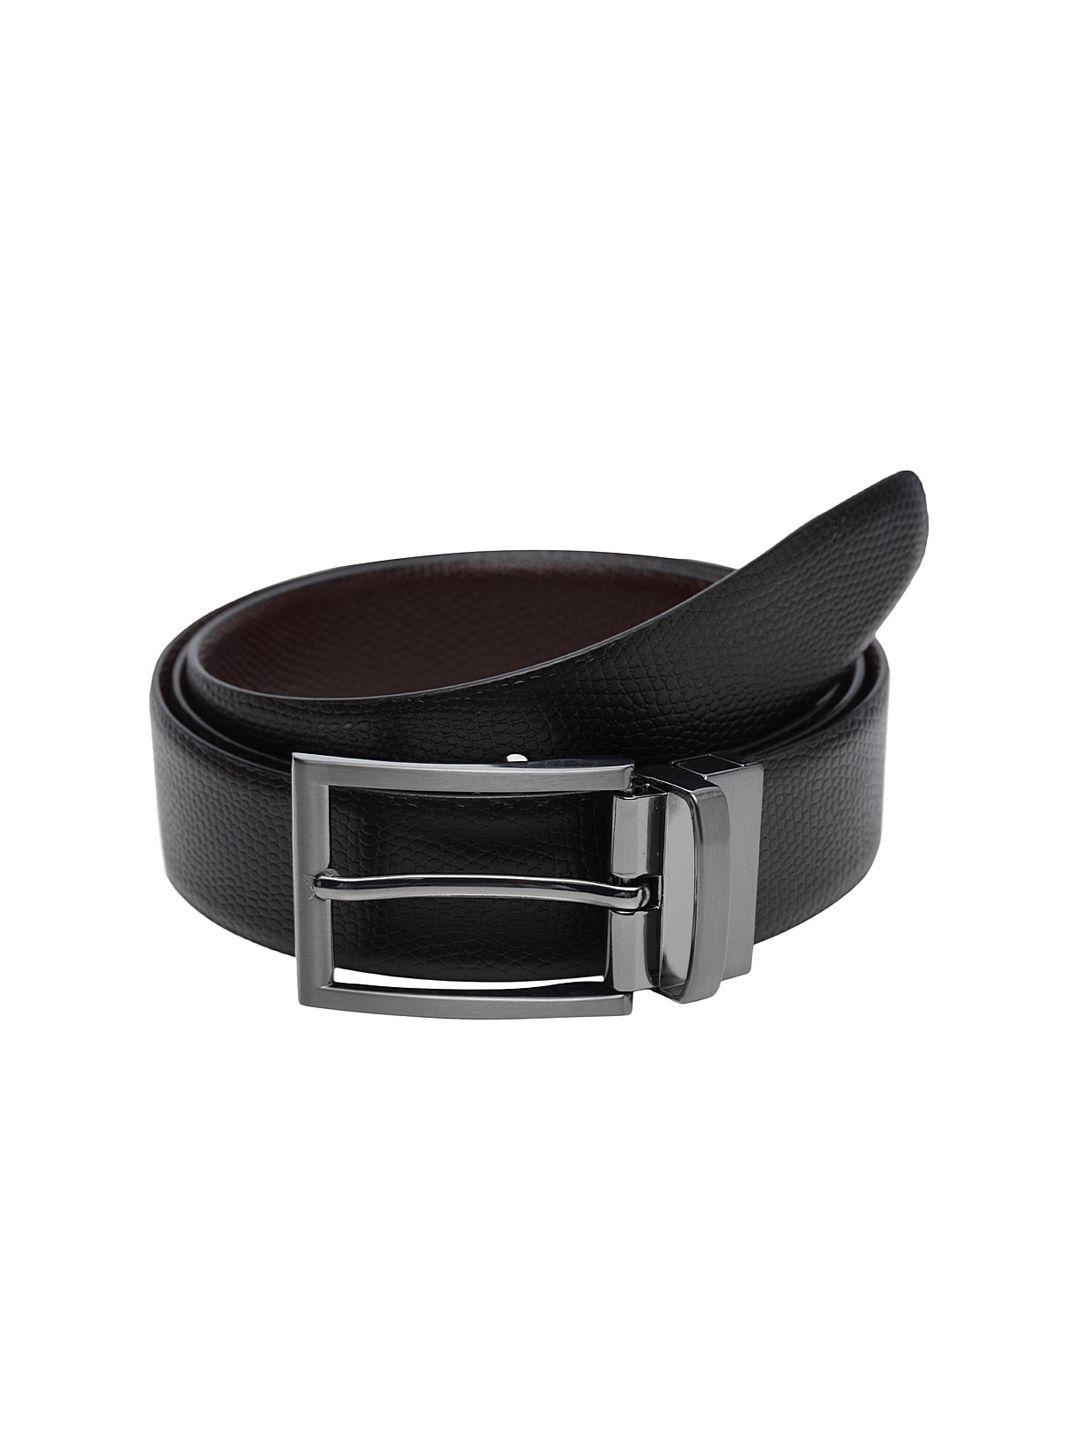 welbawt men black & brown textured leather slim reversible belt